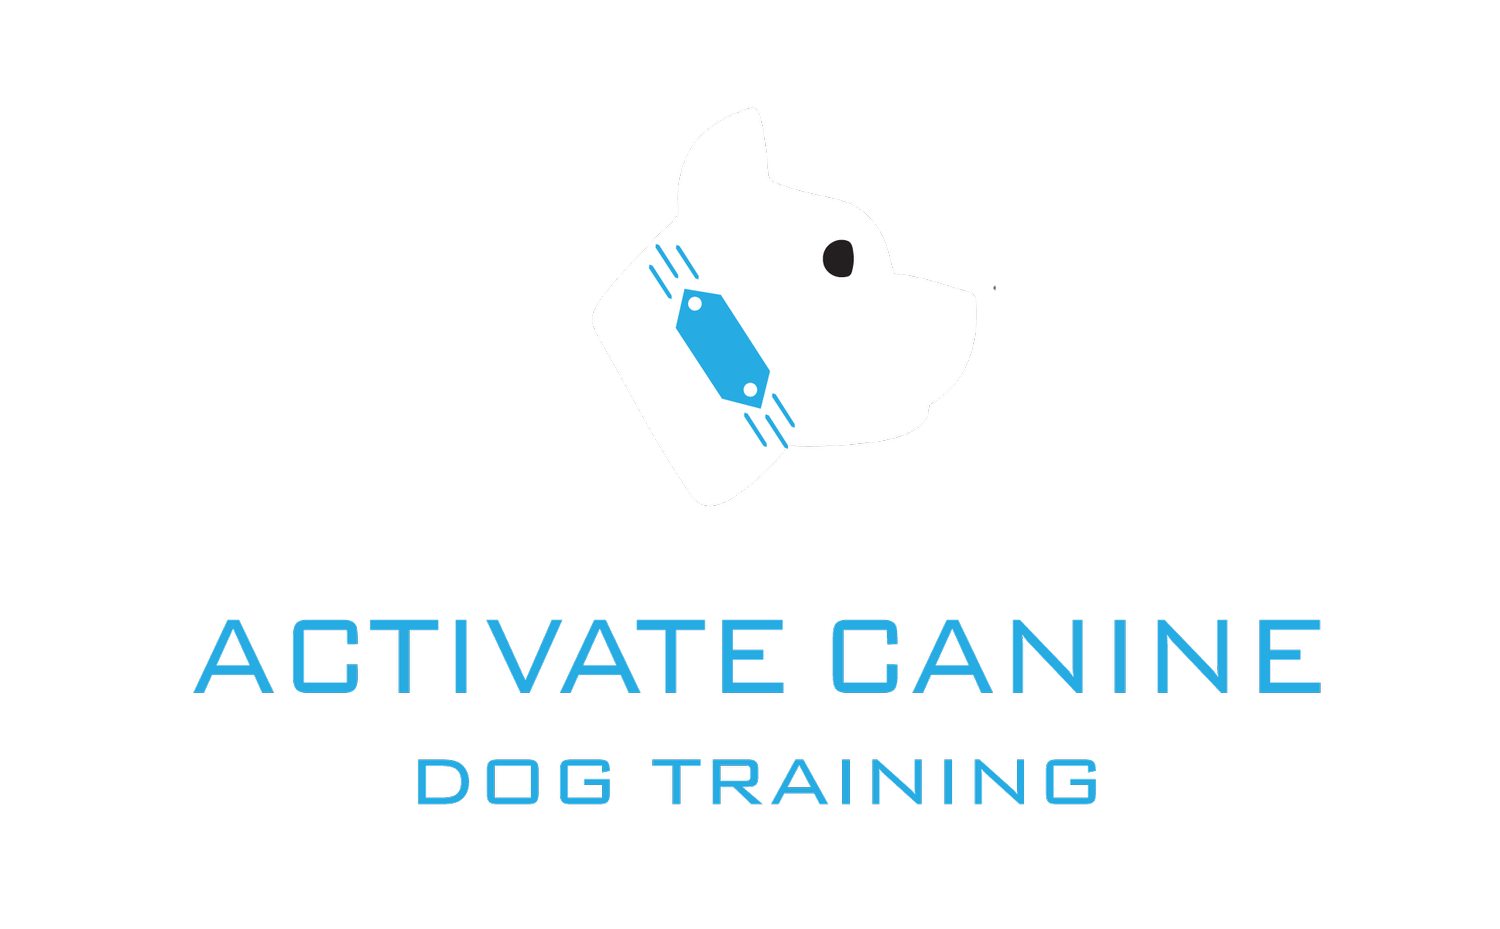 Activate Canine Dog Training